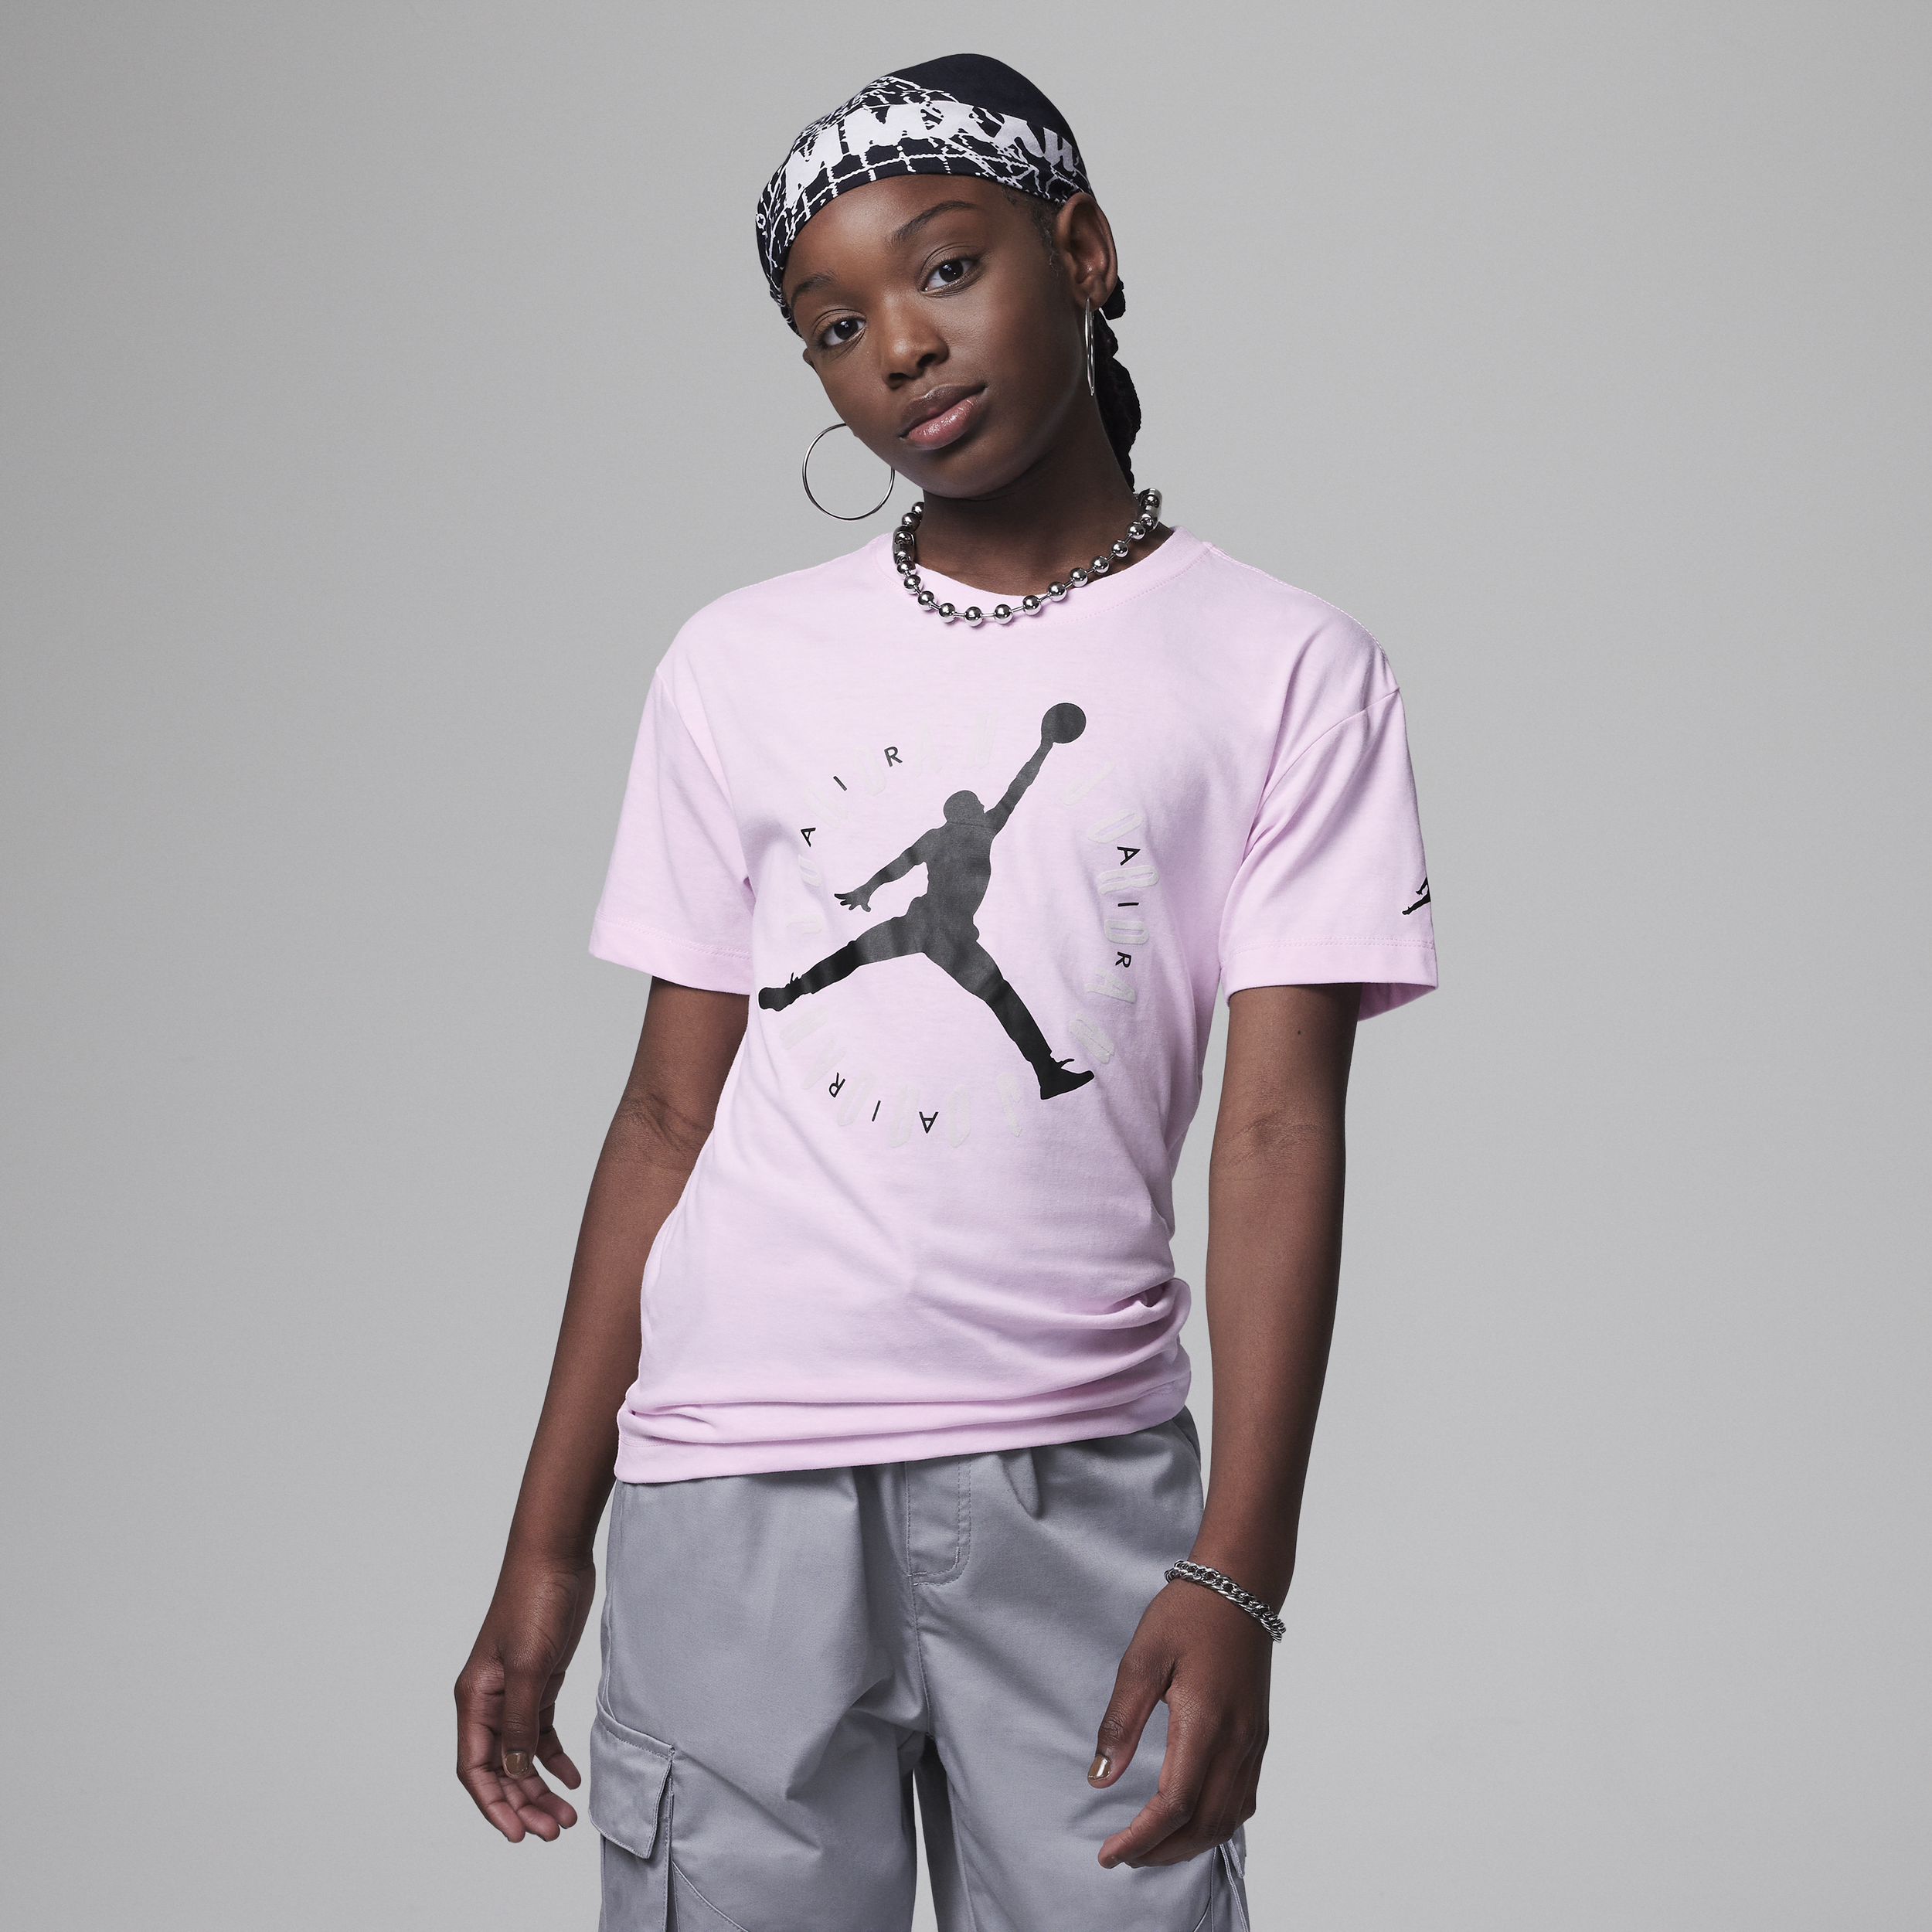 Jordan Soft Touch Tee Camiseta - Niño/a - Rosa